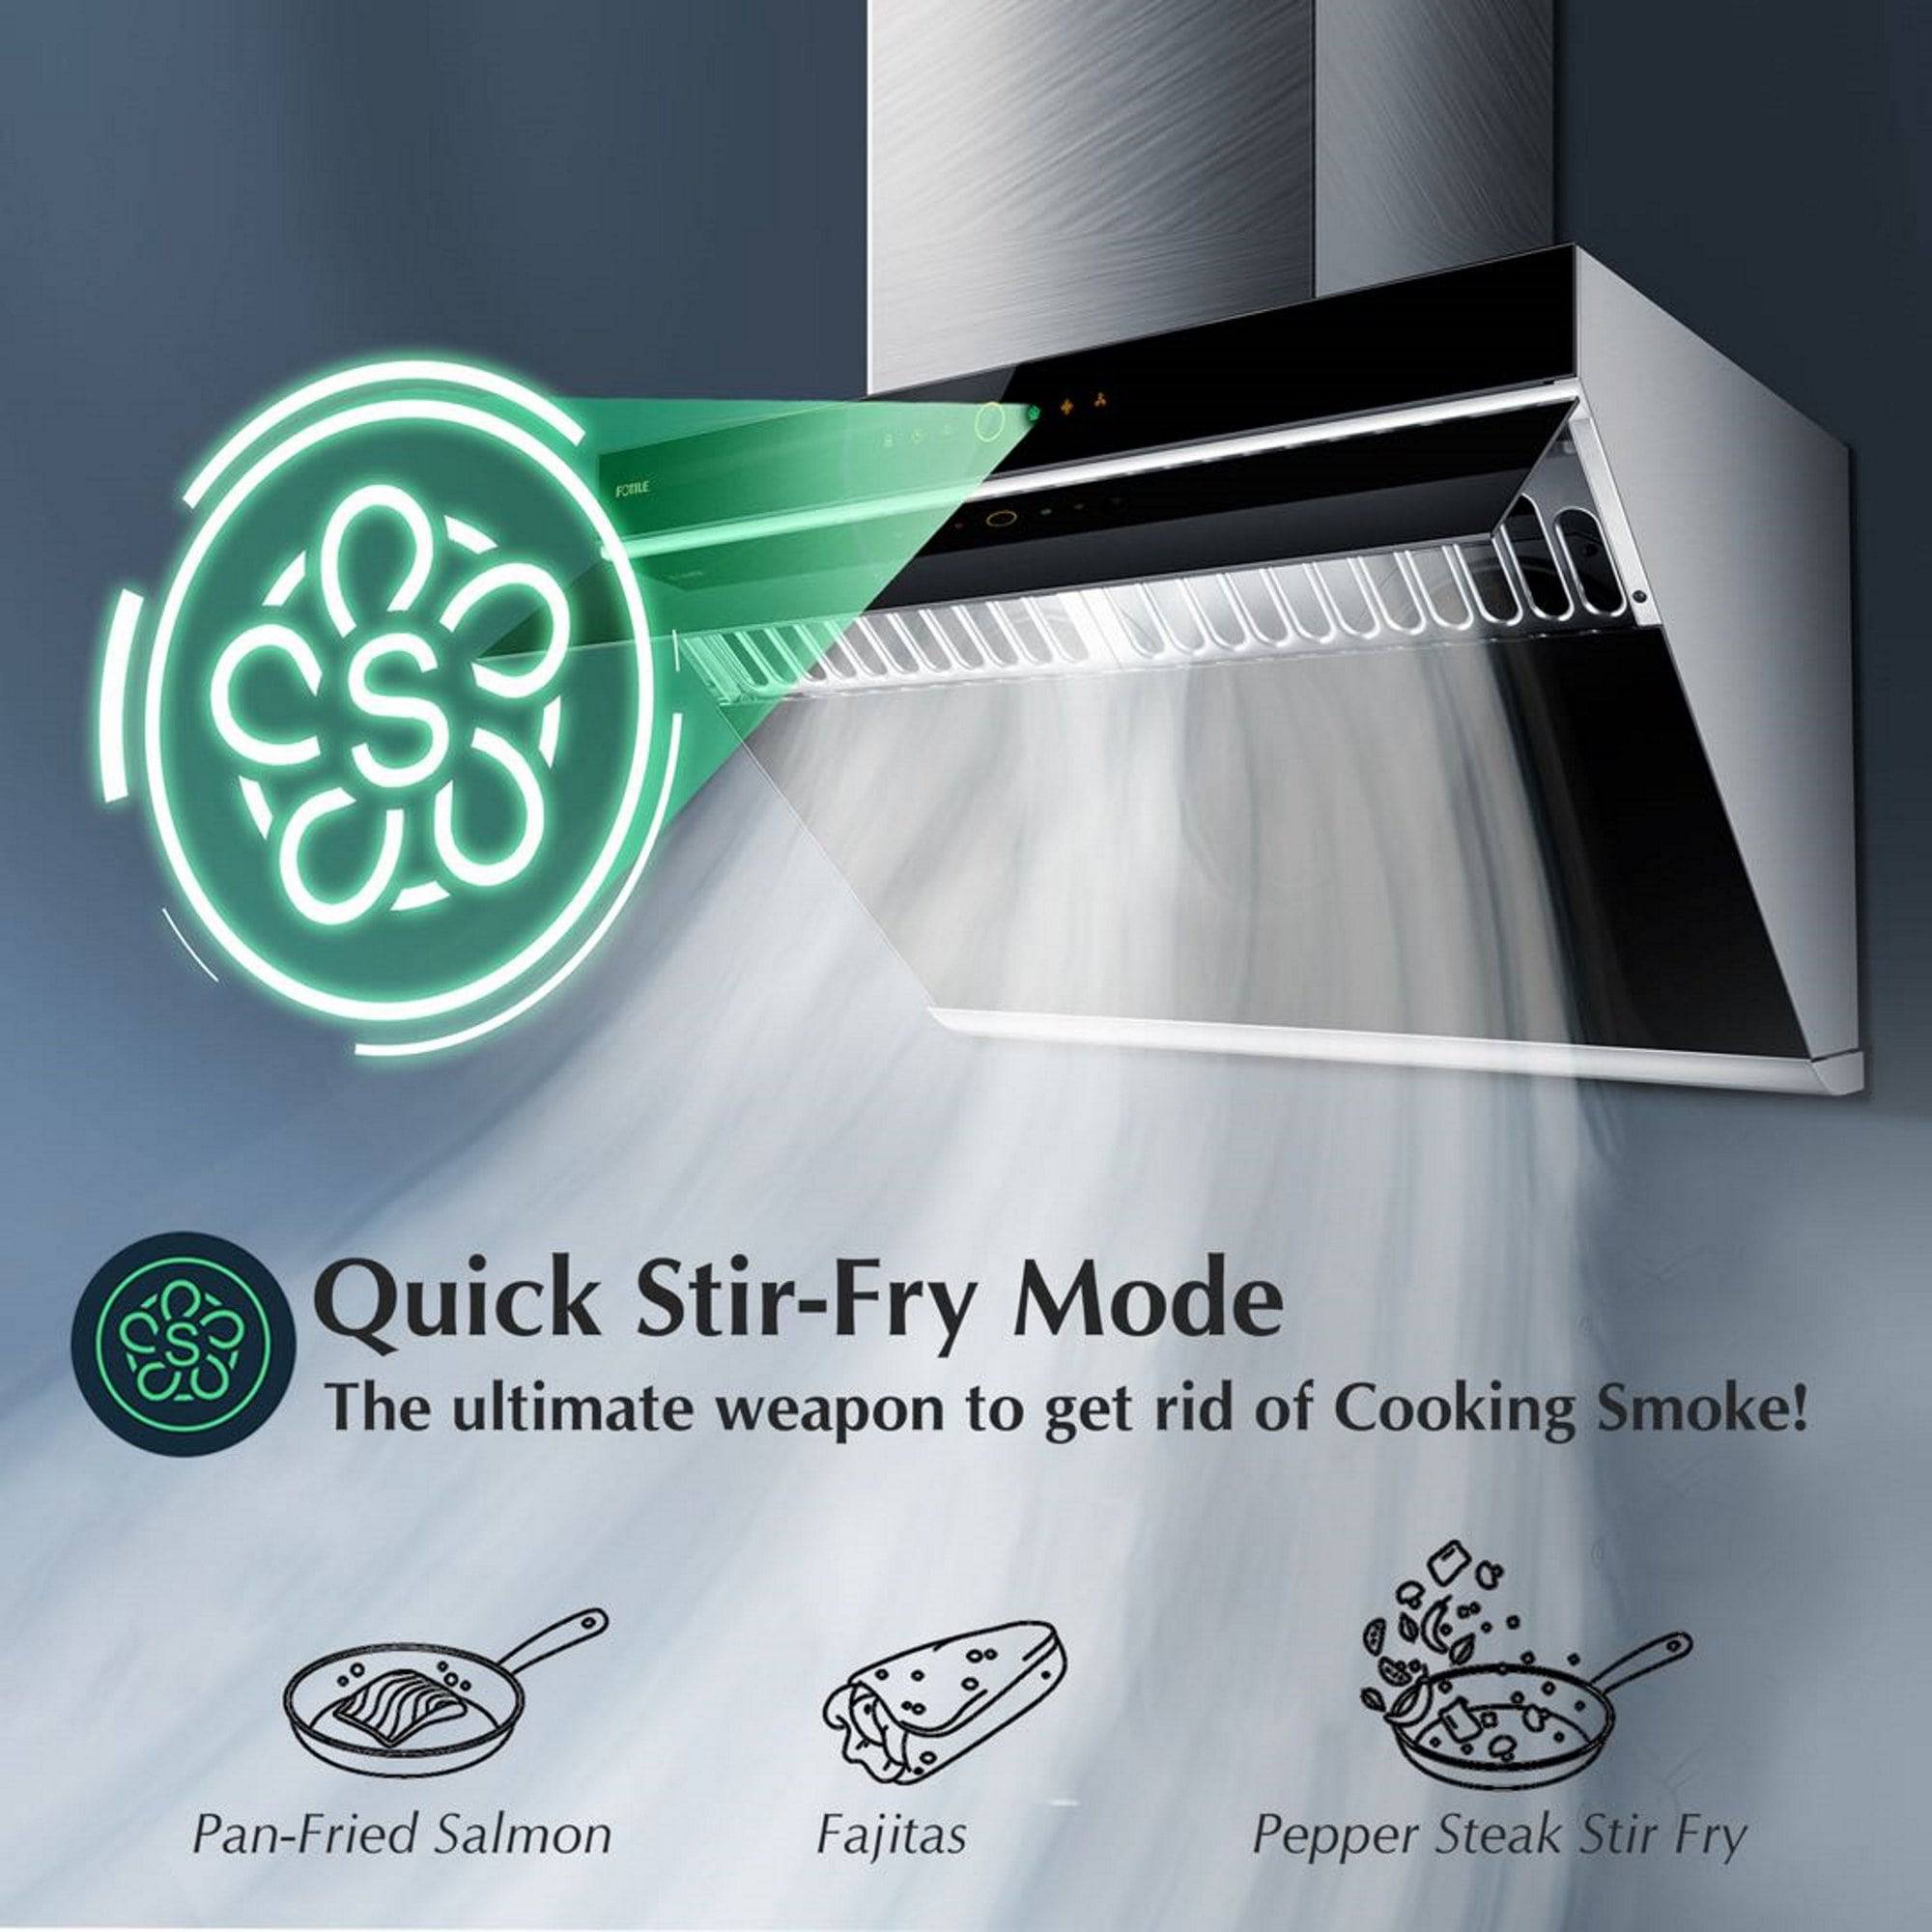 Illustration of Quick Stir-Fry Mode on the FOTILE JQG7505 and JQG9006 Range Hoods